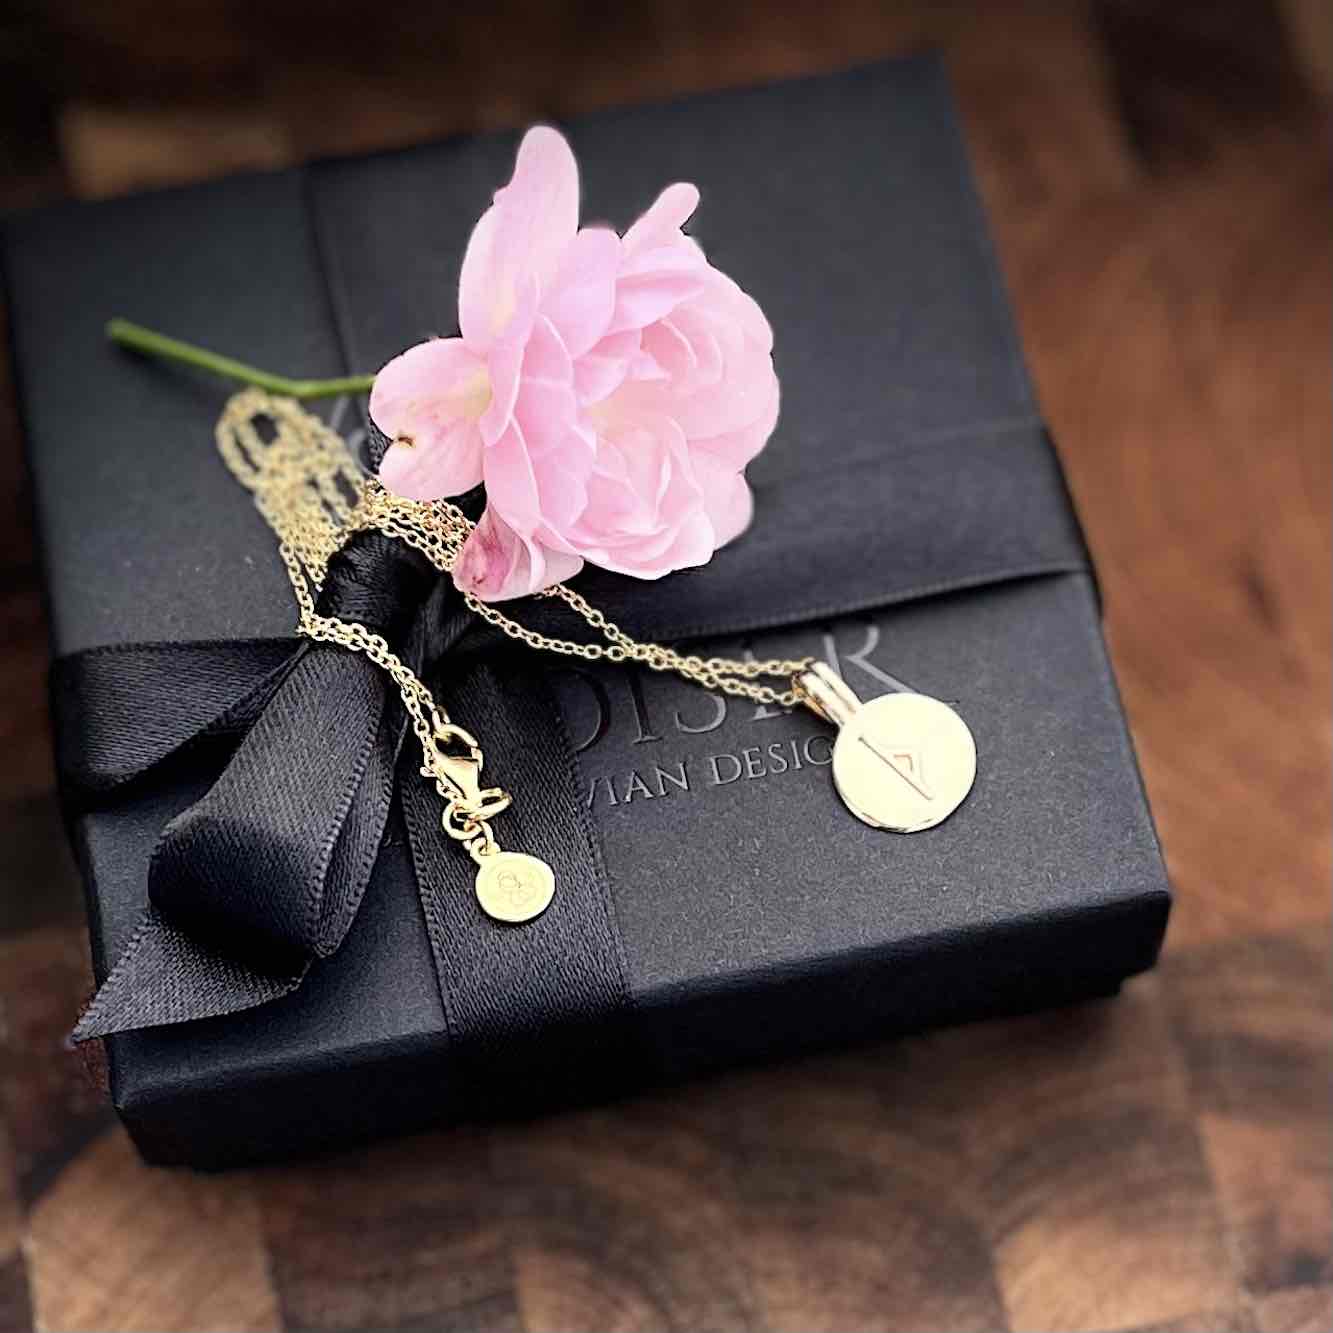 Soldiser Rune Pendant Thurs Gold Necklace on Gift Box with Flower